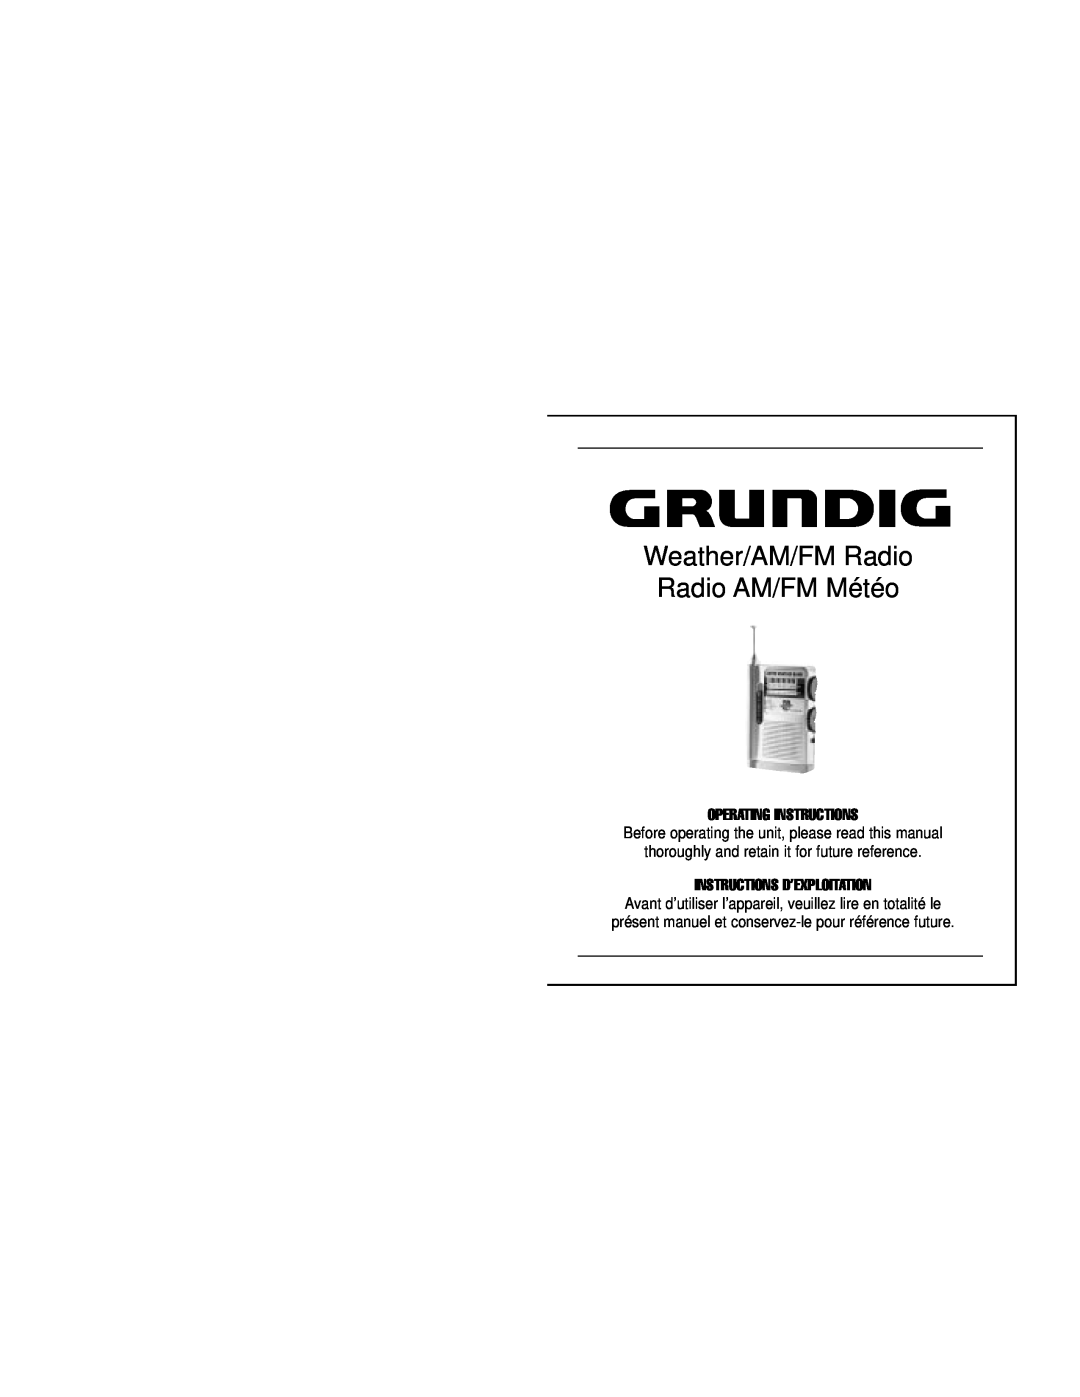 Grundig manual Weather/AM/FM Radio Radio AM/FM Météo, Operating Instructions, Instructions D’Exploitation 